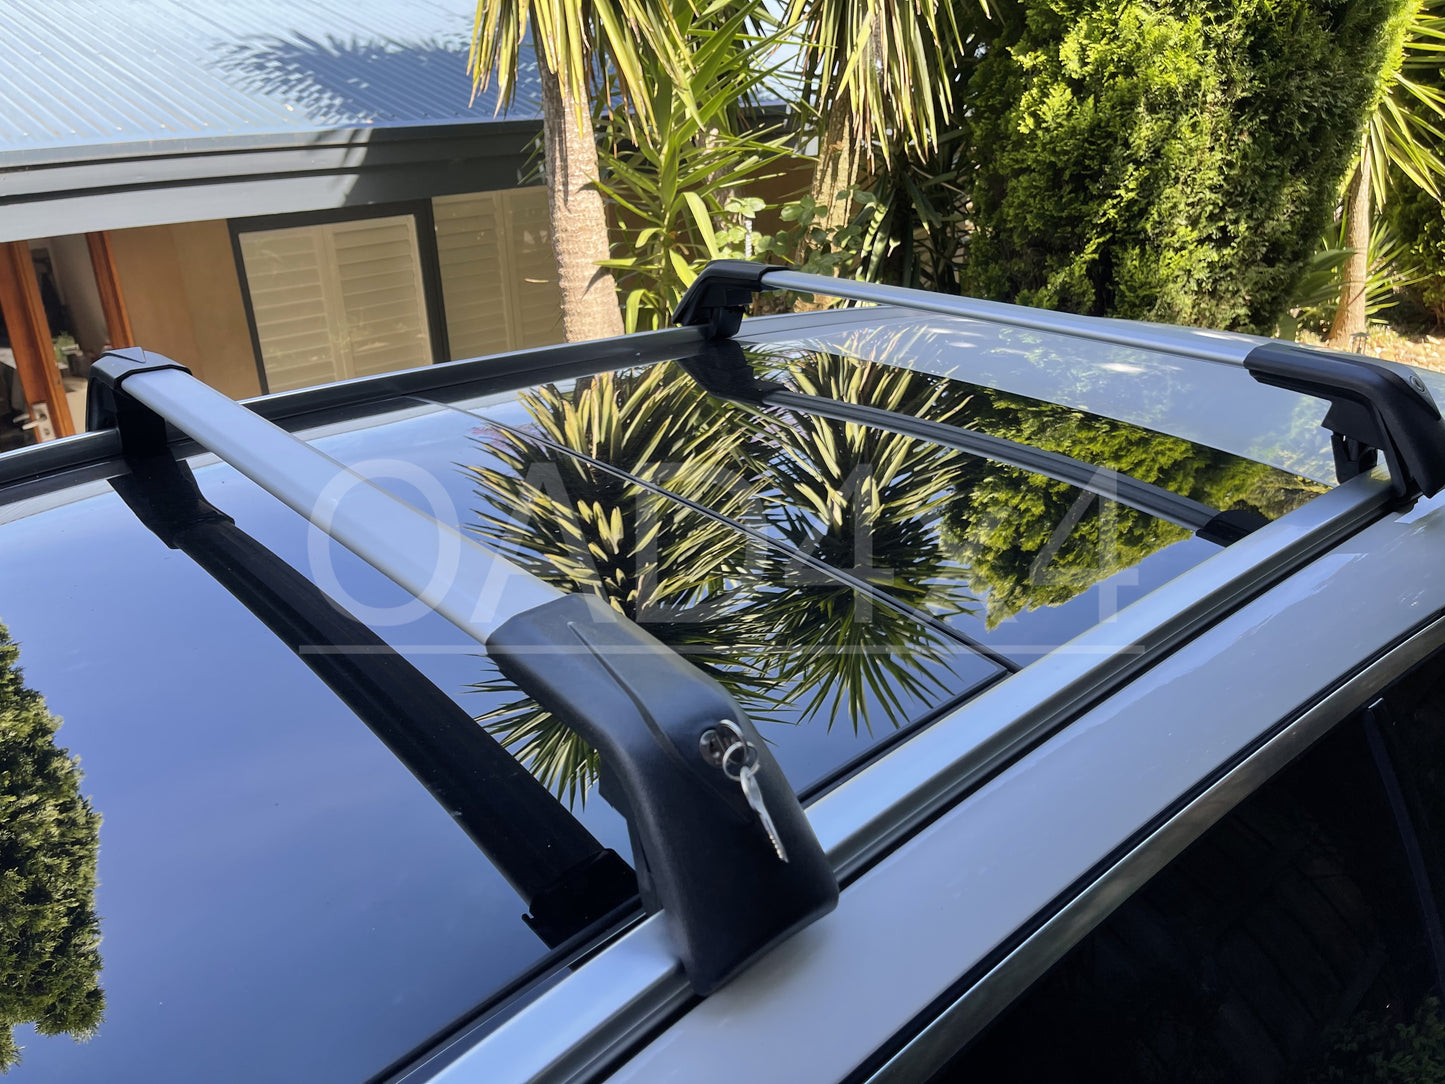 1 Pair Aluminum Silver Cross Bar Roof Racks Baggage Holder for Fiat Panda 2013-2019 Clamp in Flush Rail